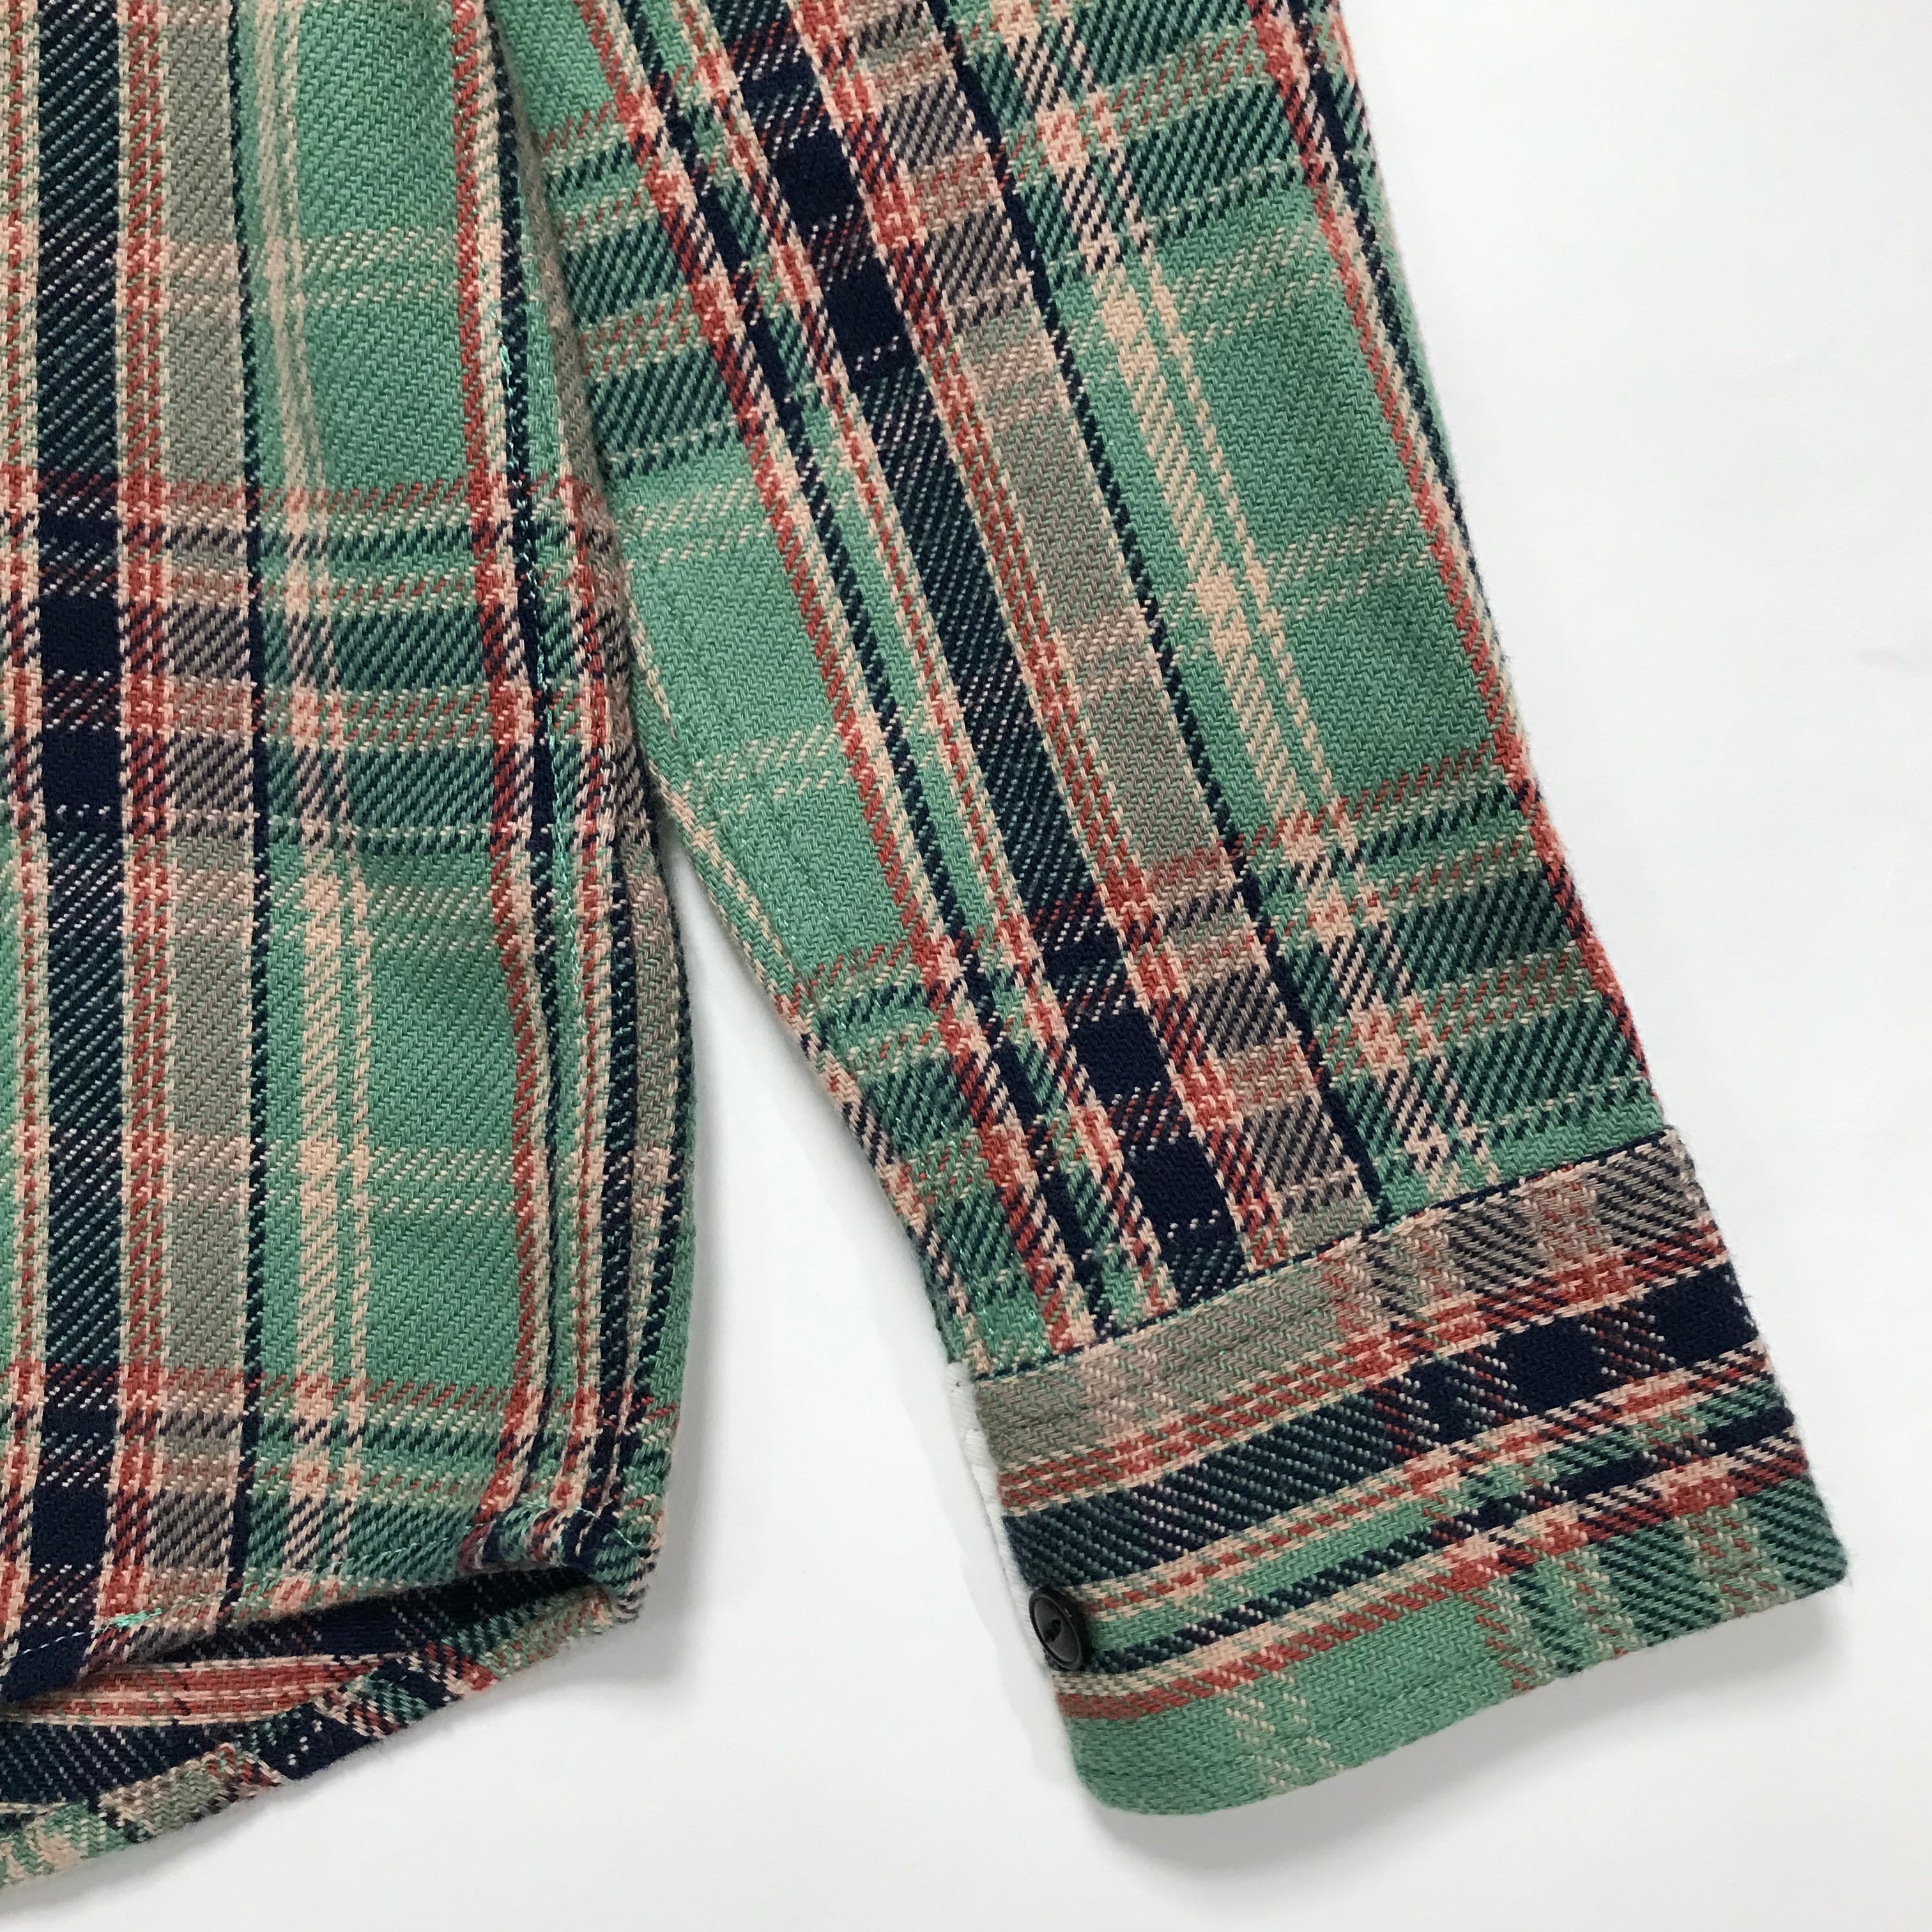 [M] Visvim 10AW Black Elk Flannel Shirt L/S Green – StylisticsJapan